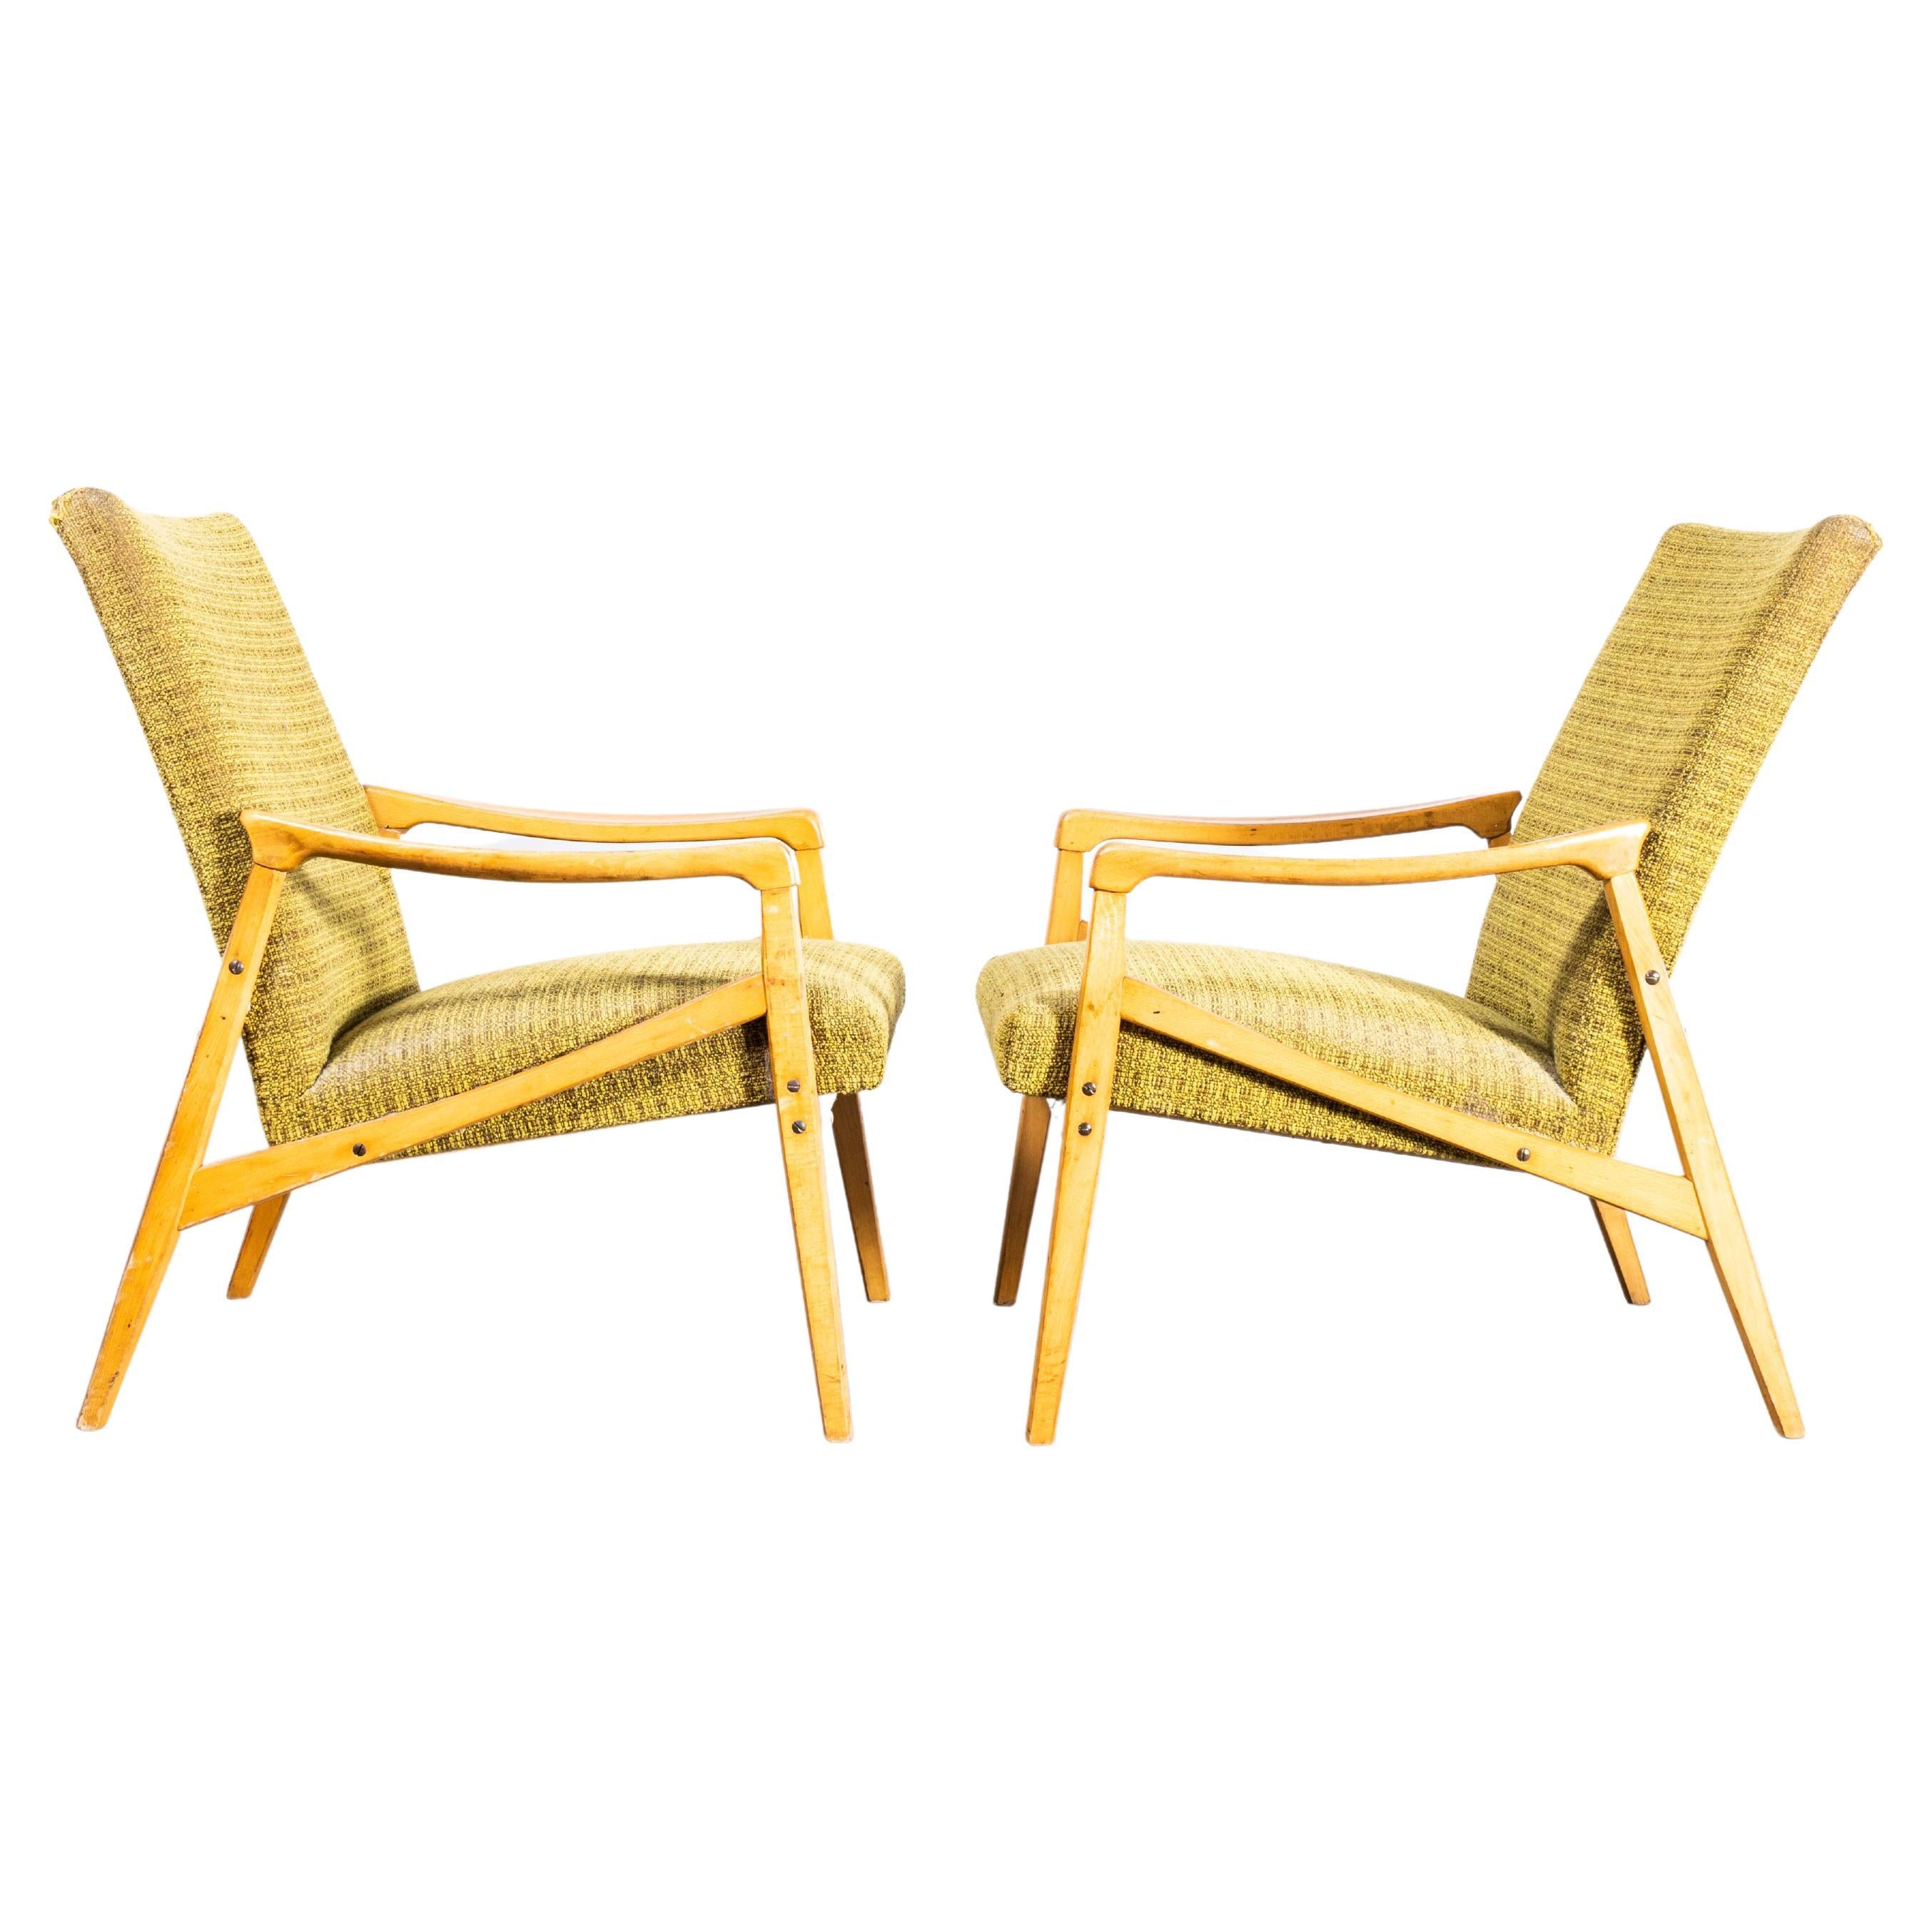 Jaroslav Smidek Original-Sessel aus den 1950er Jahren – Paar in Limonengrün